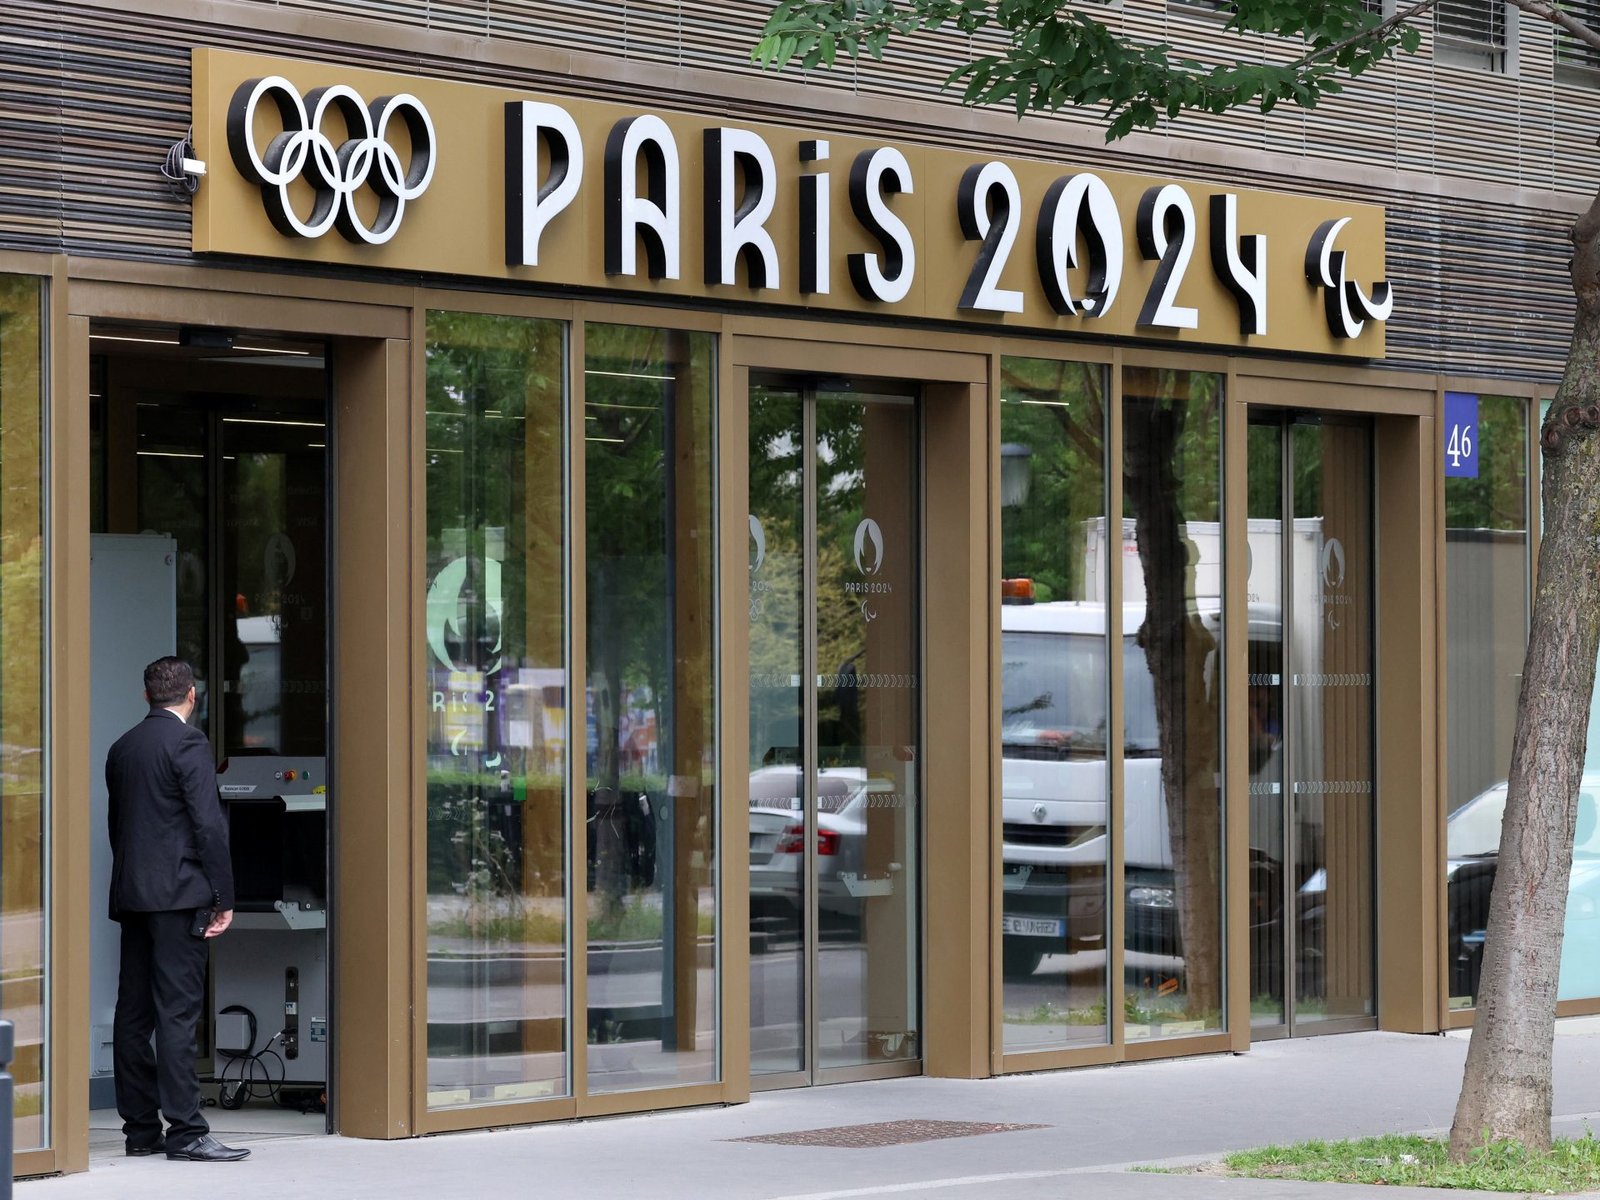 French police raid Paris 2024 headquarters in corruption probe